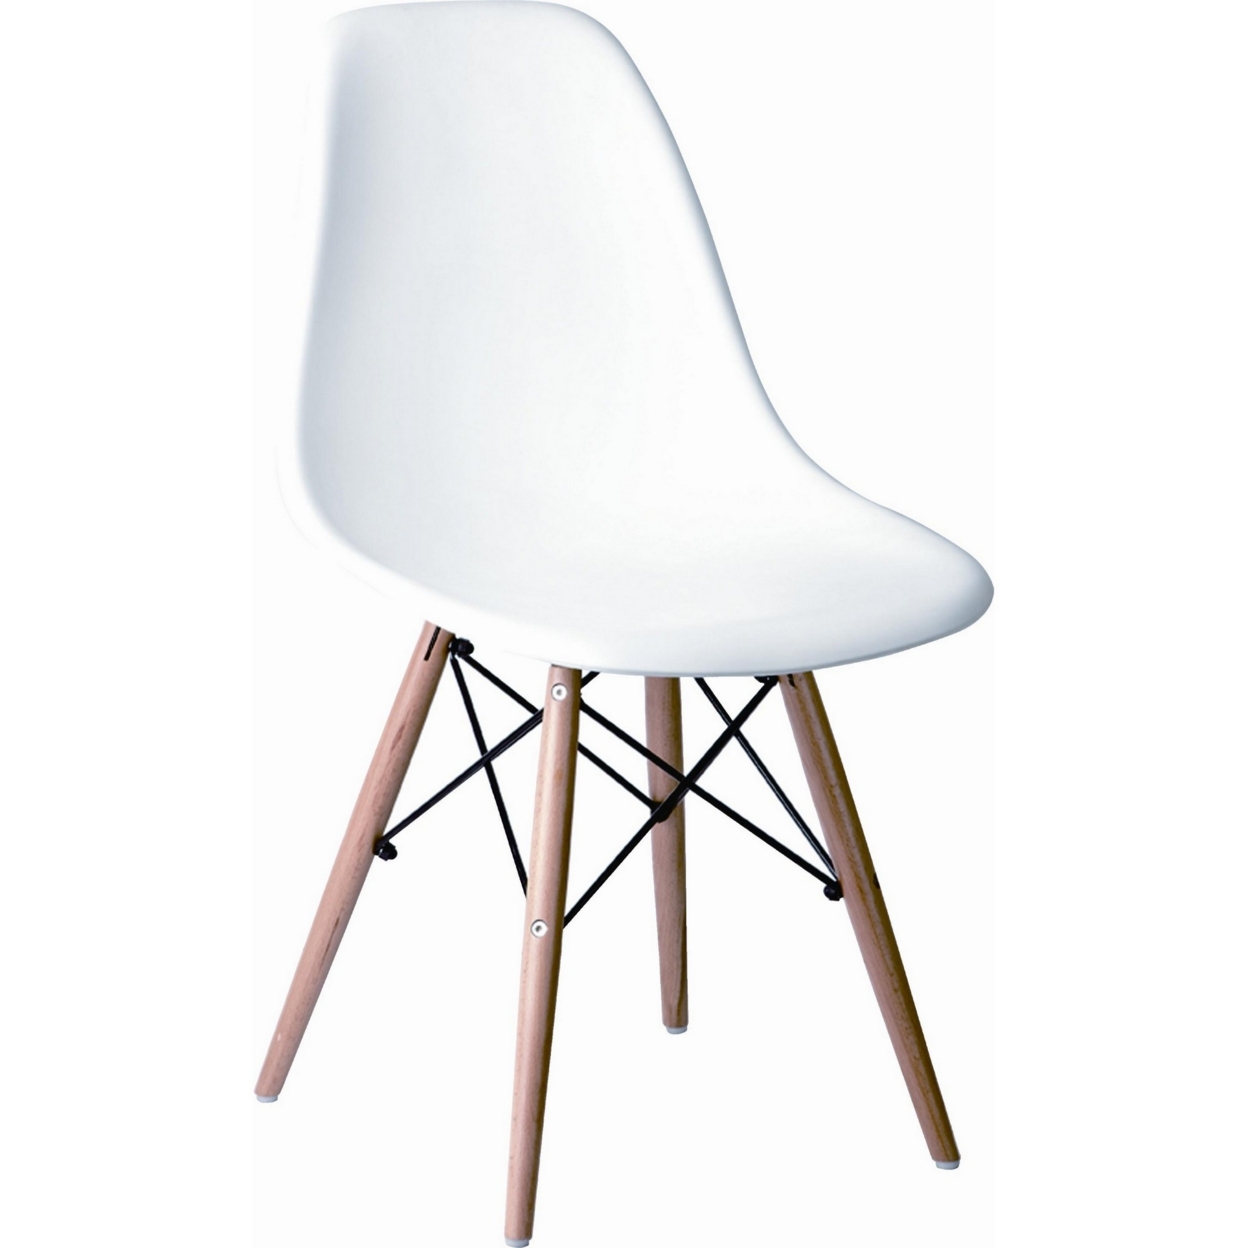 Louie 21 Inch Modern Side Chair, Wood Finished Legs, Crisp White Finish- Saltoro Sherpi